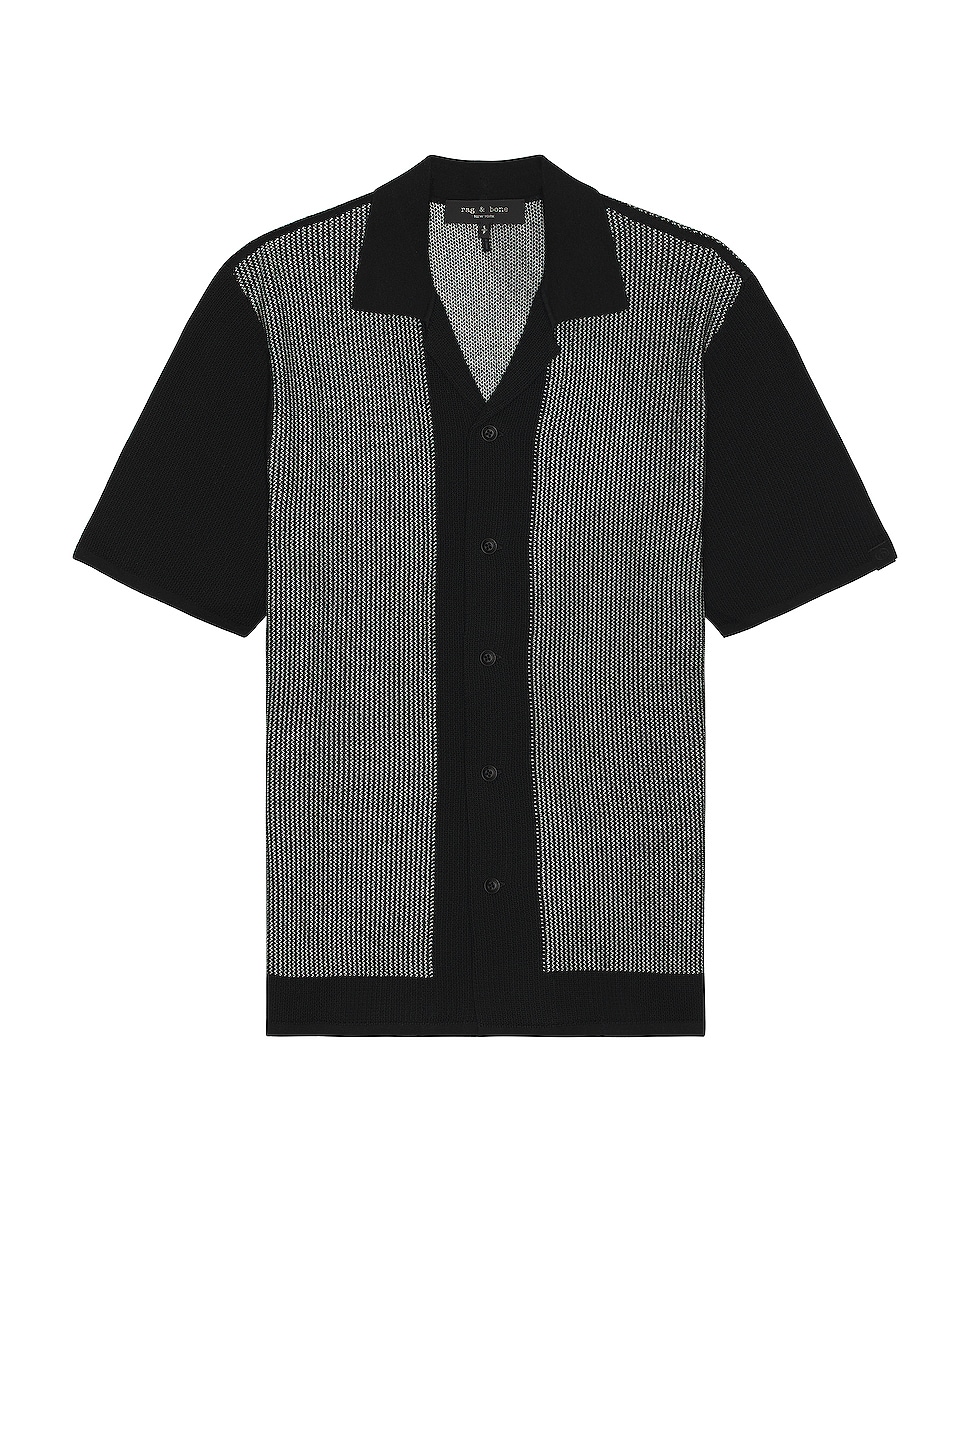 Image 1 of Rag & Bone Harvey Knit Camp Shirt in Black & White